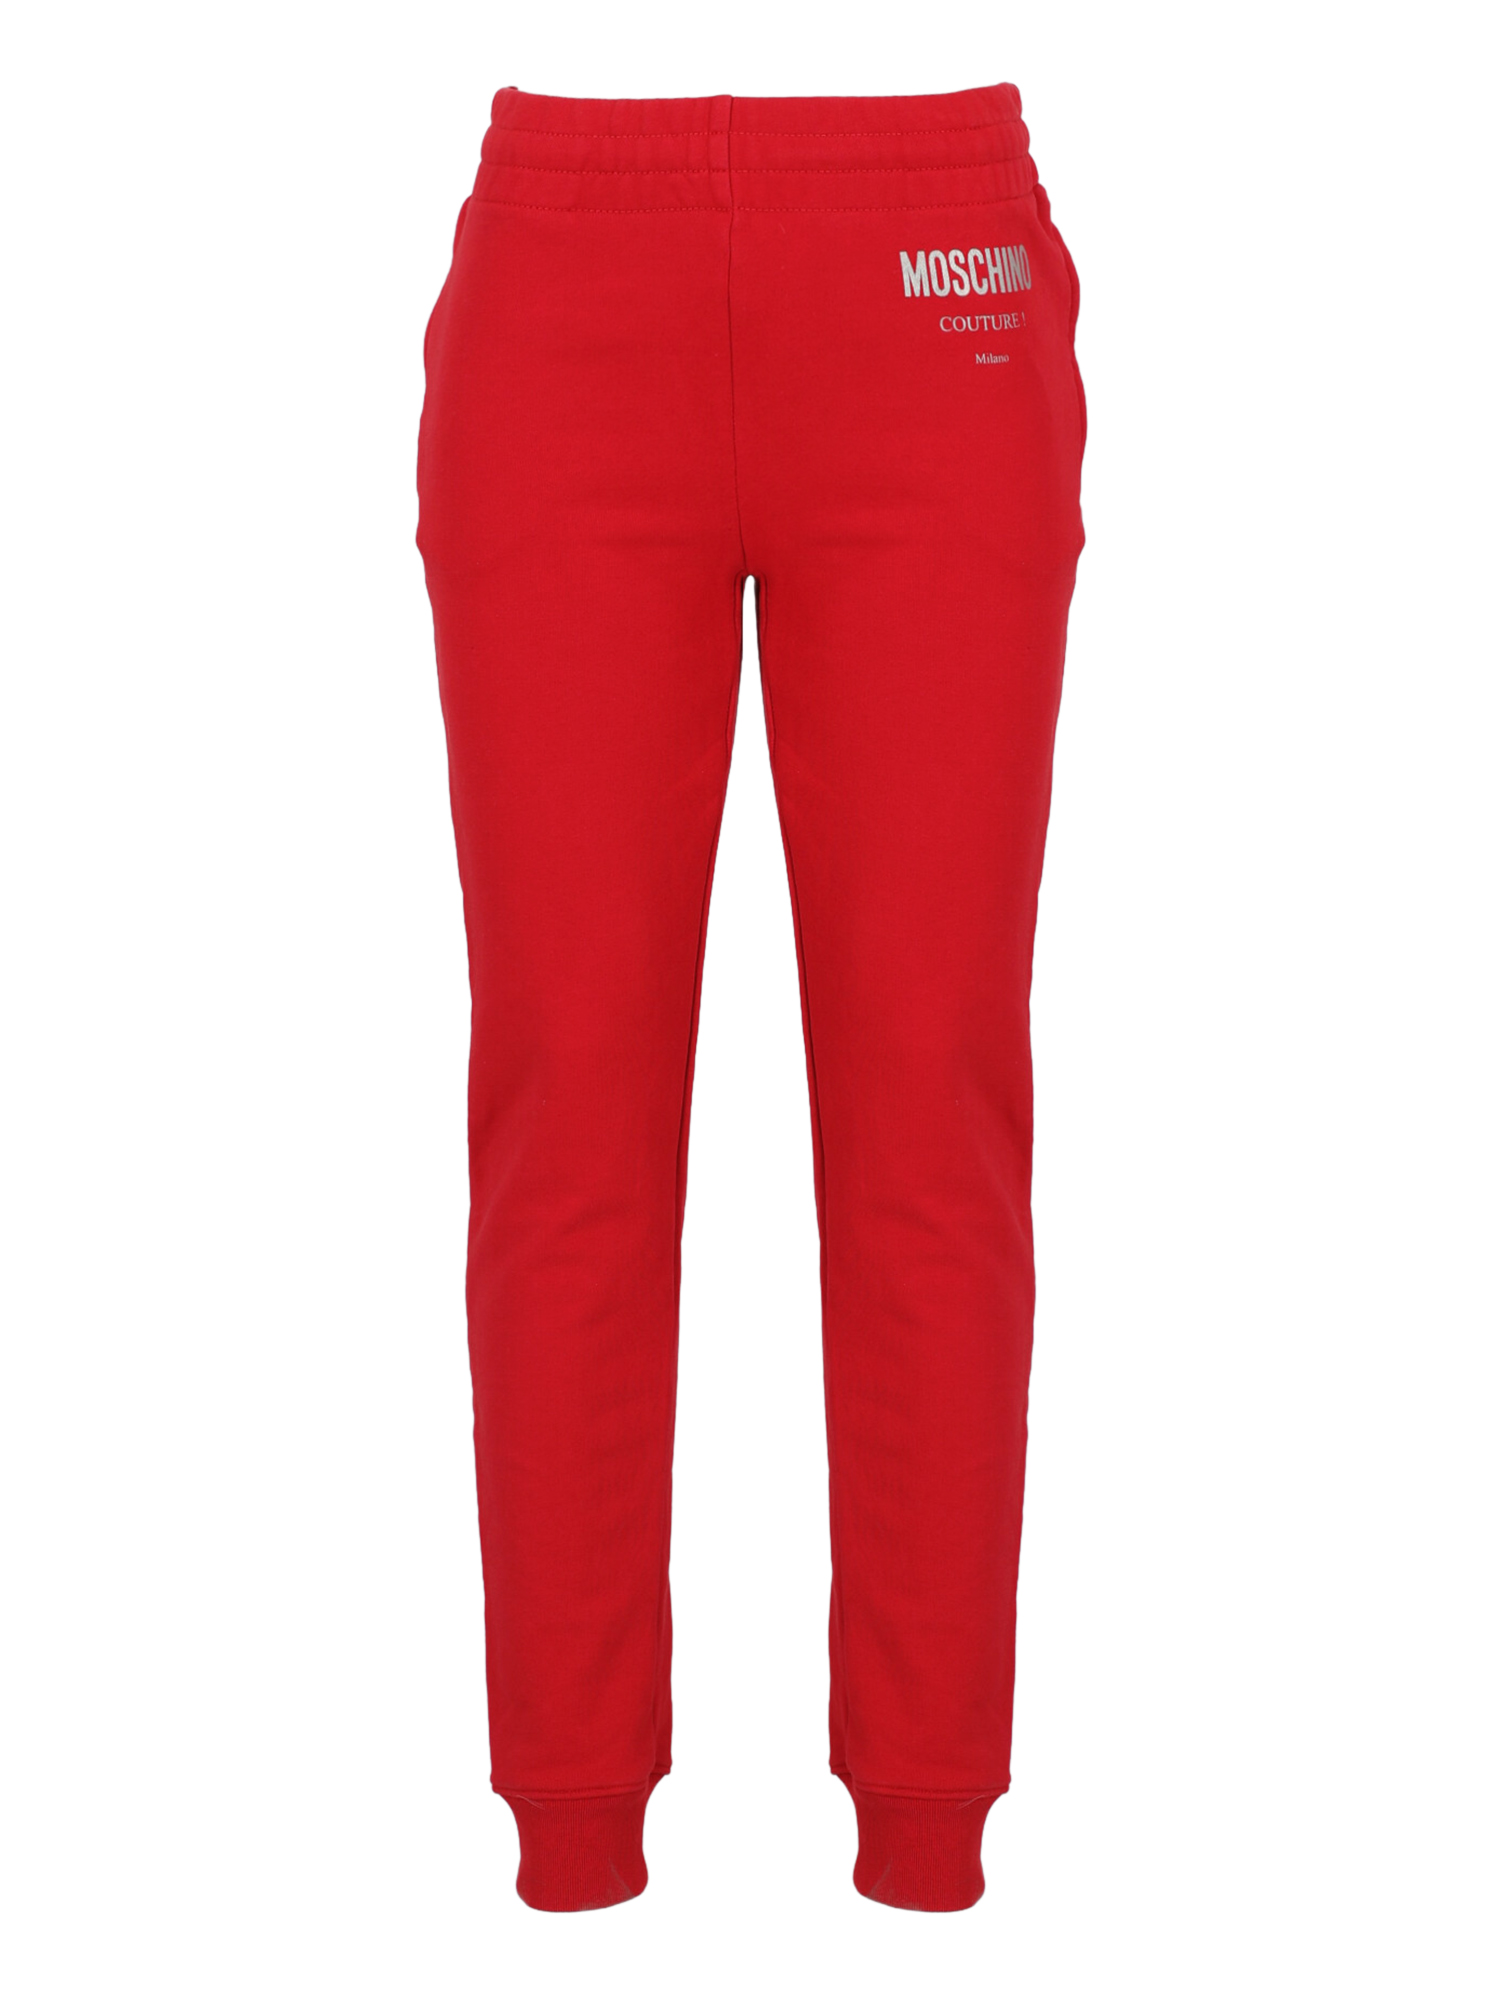 Moschino Femme Pantalons Red Cotton